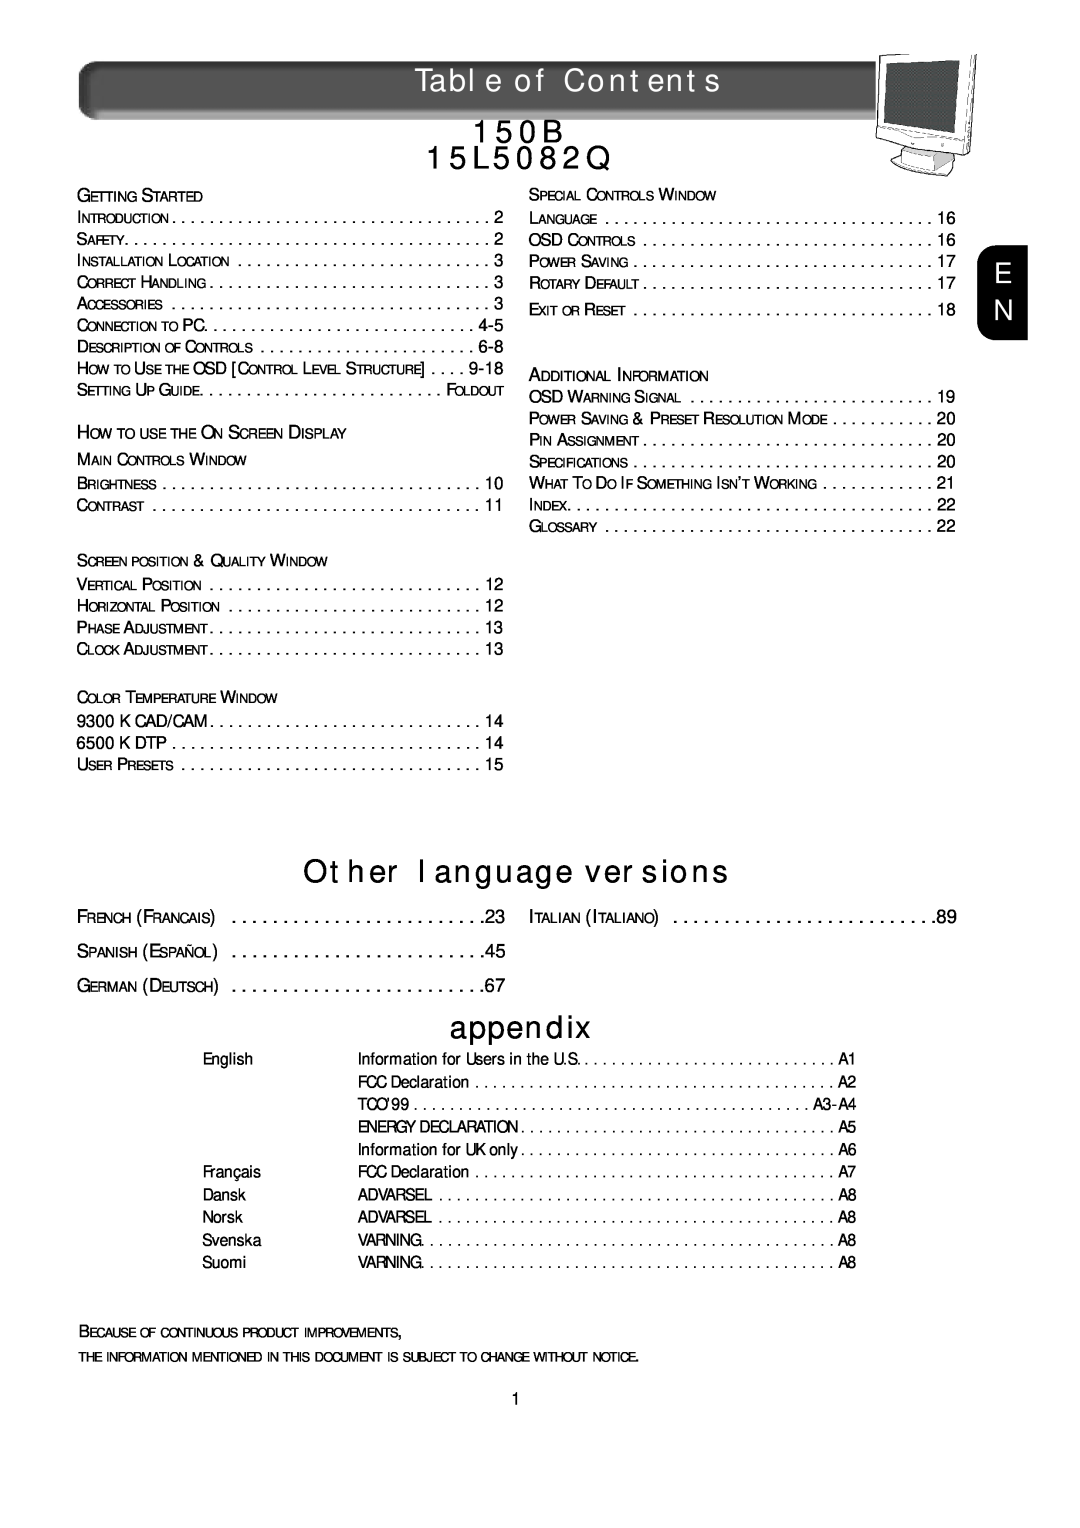 Apple appendix Table of Contents, English, Français, Dansk, Norsk, Svenska, Suomi, 150B 15L5082Q 